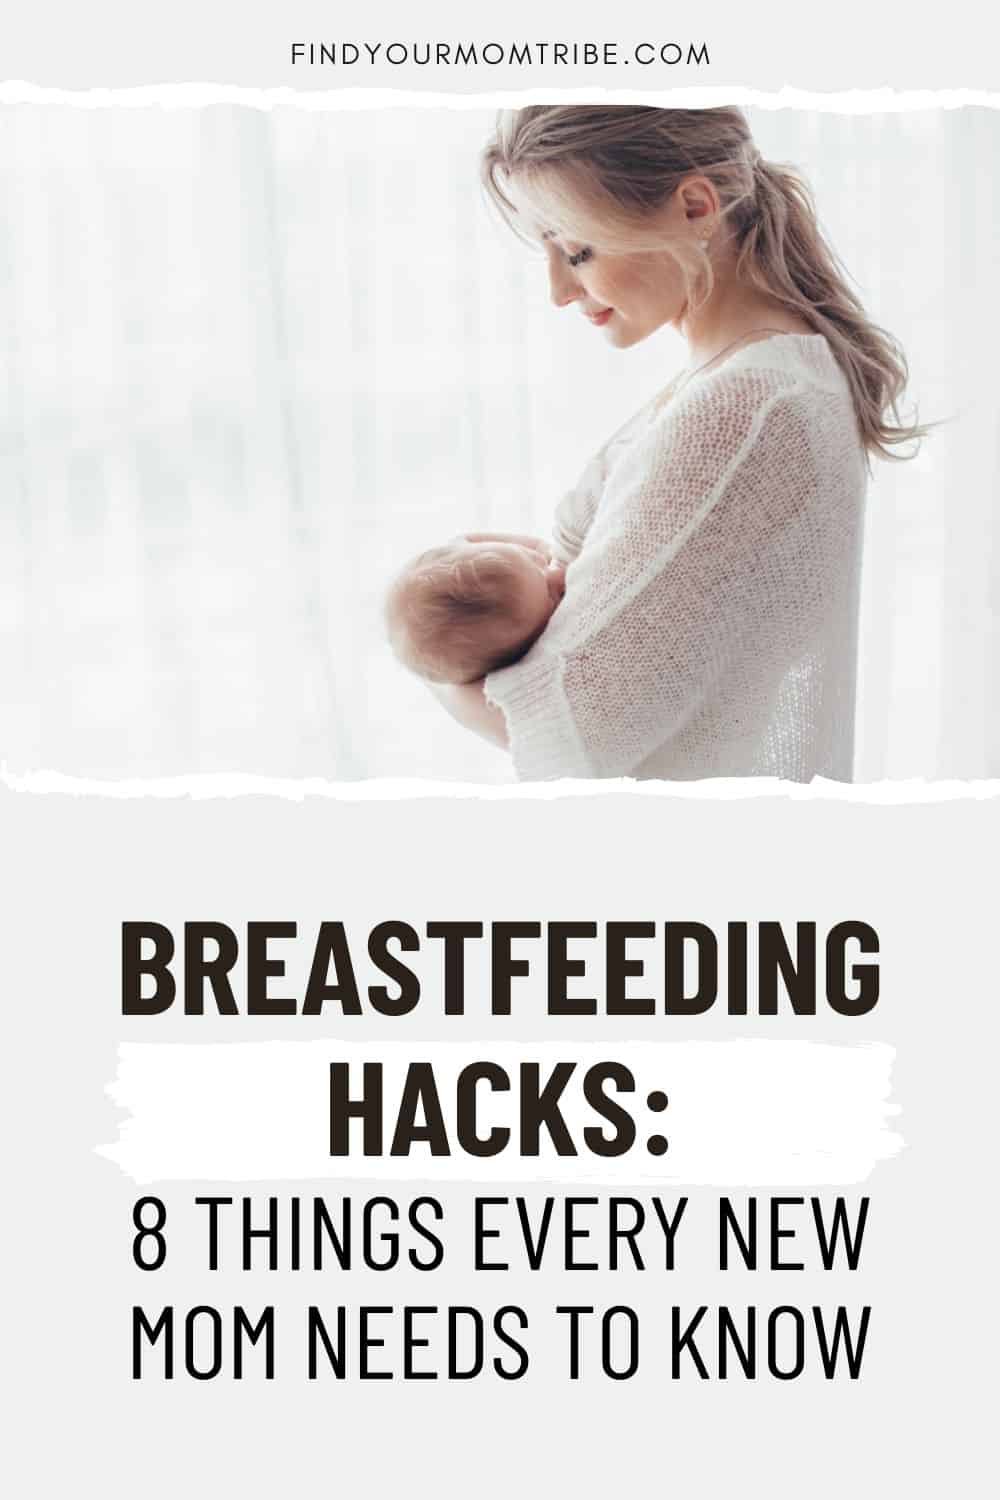 Breastfeeding hacks pinterest